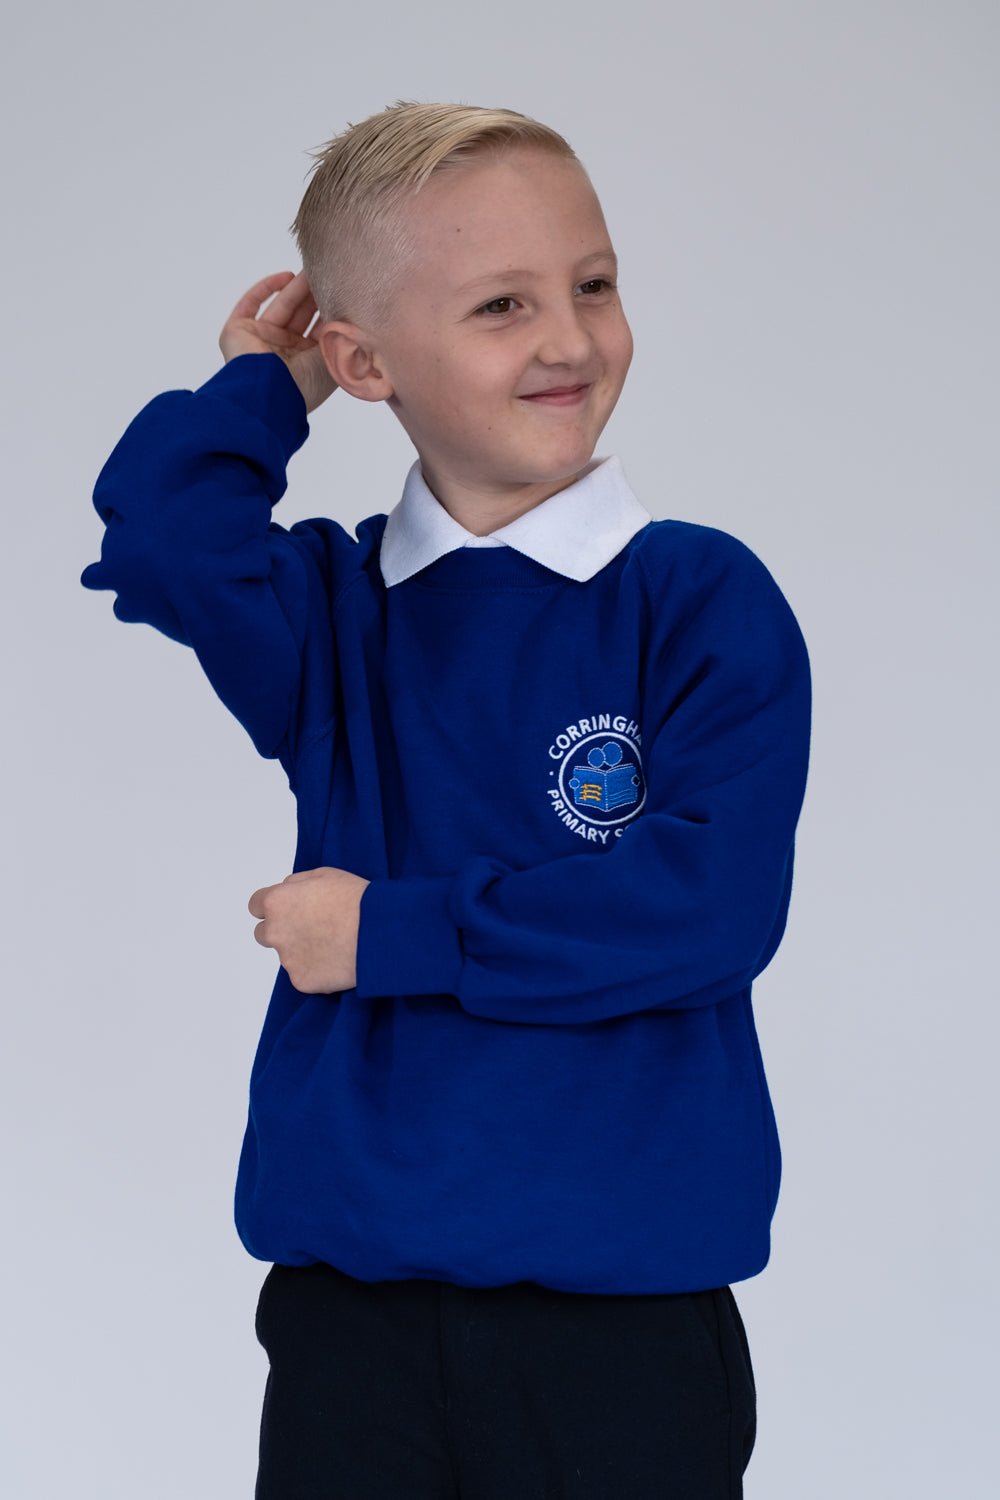 Corringham Primary Jumper - Uniformwise Schoolwear